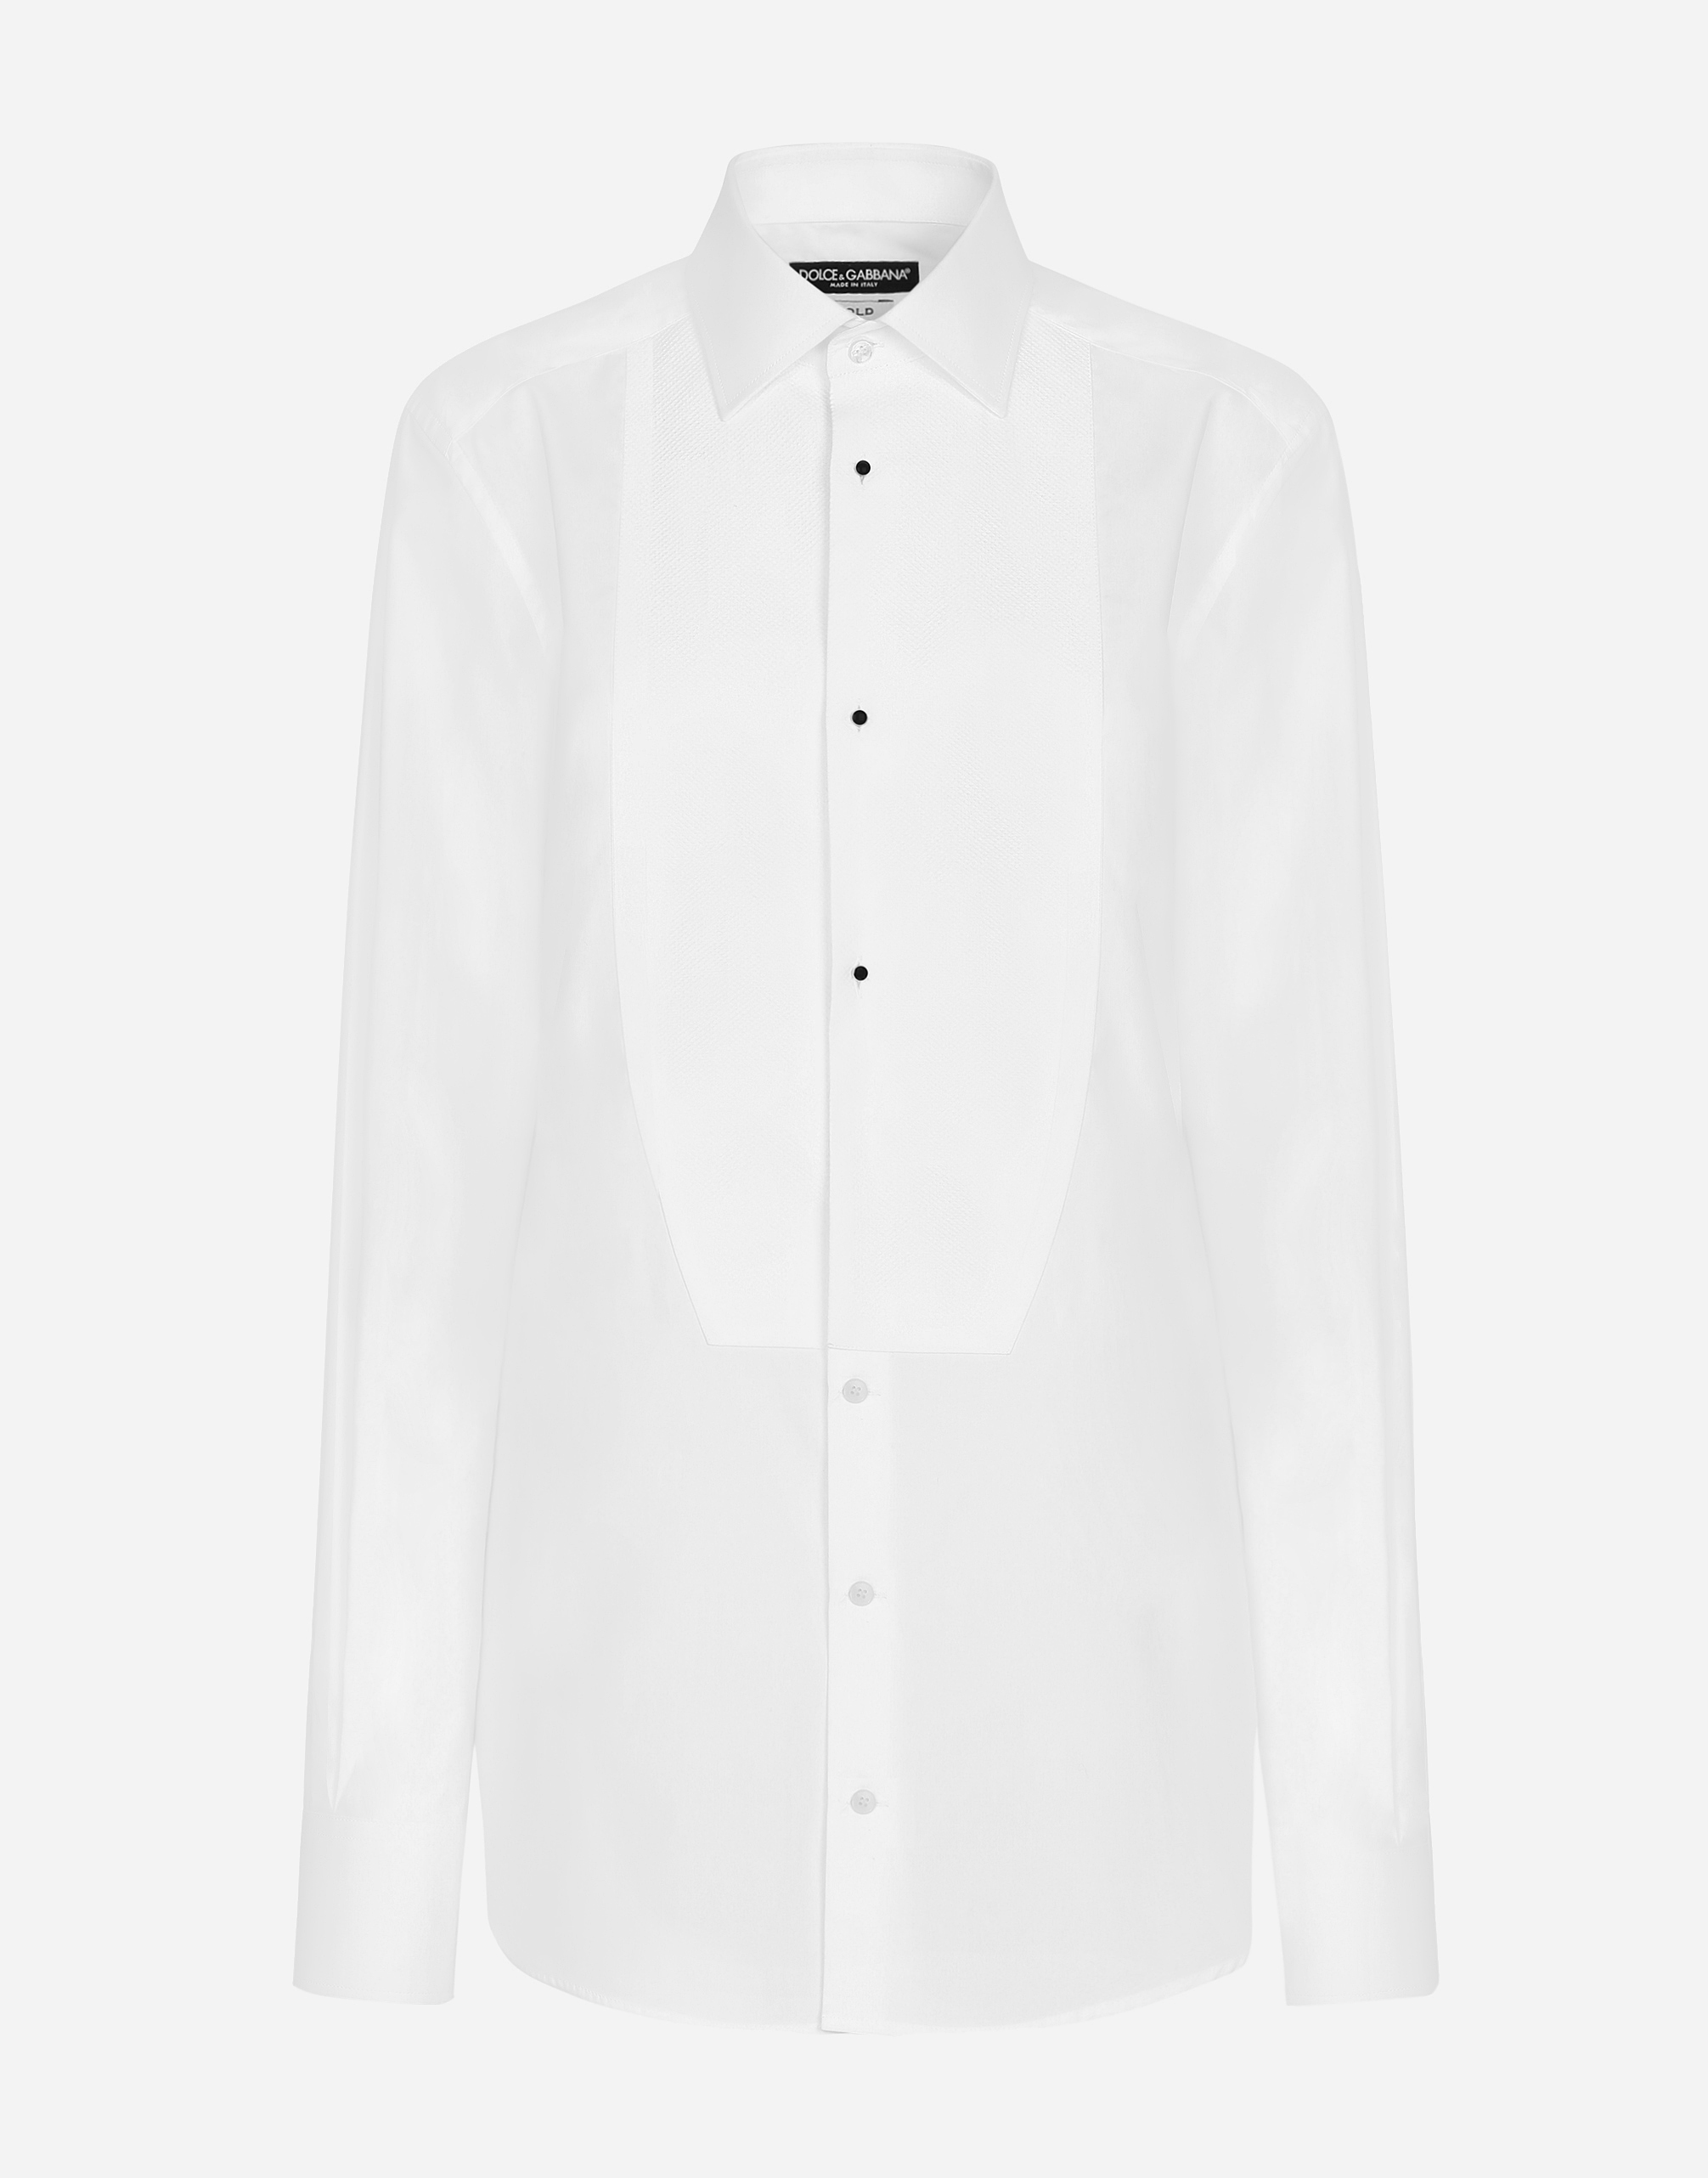 Cotton tuxedo shirt with piqué shirt front